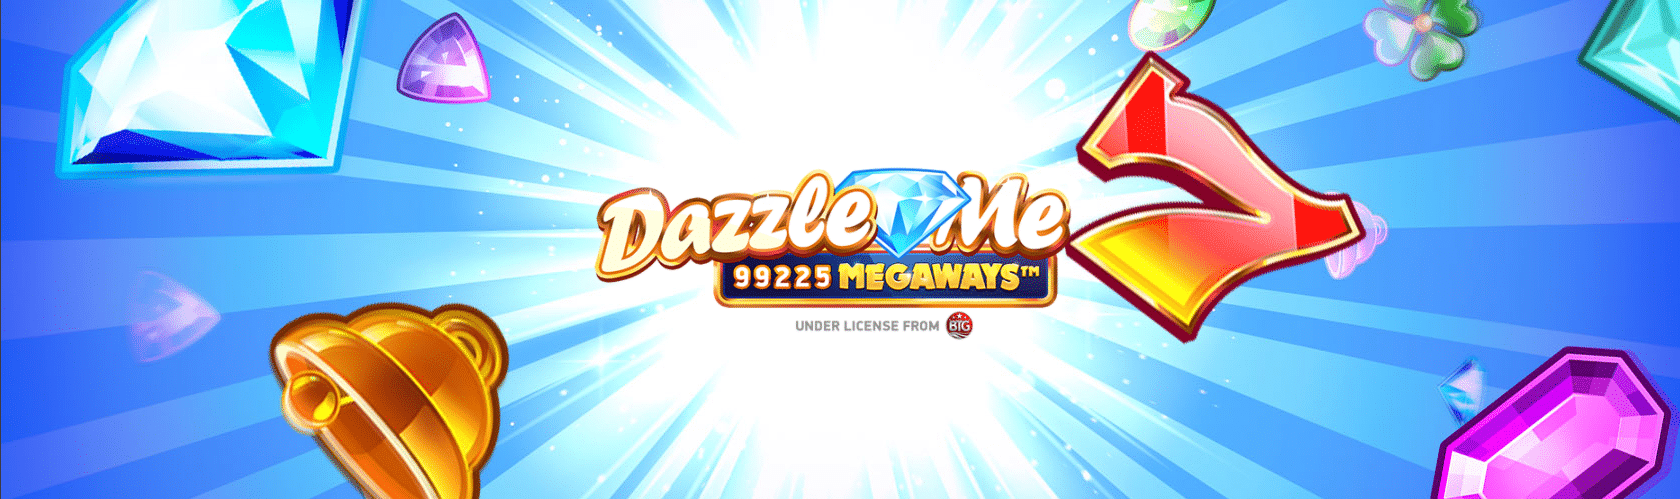 Dazzle Me Megaways Slot Banner